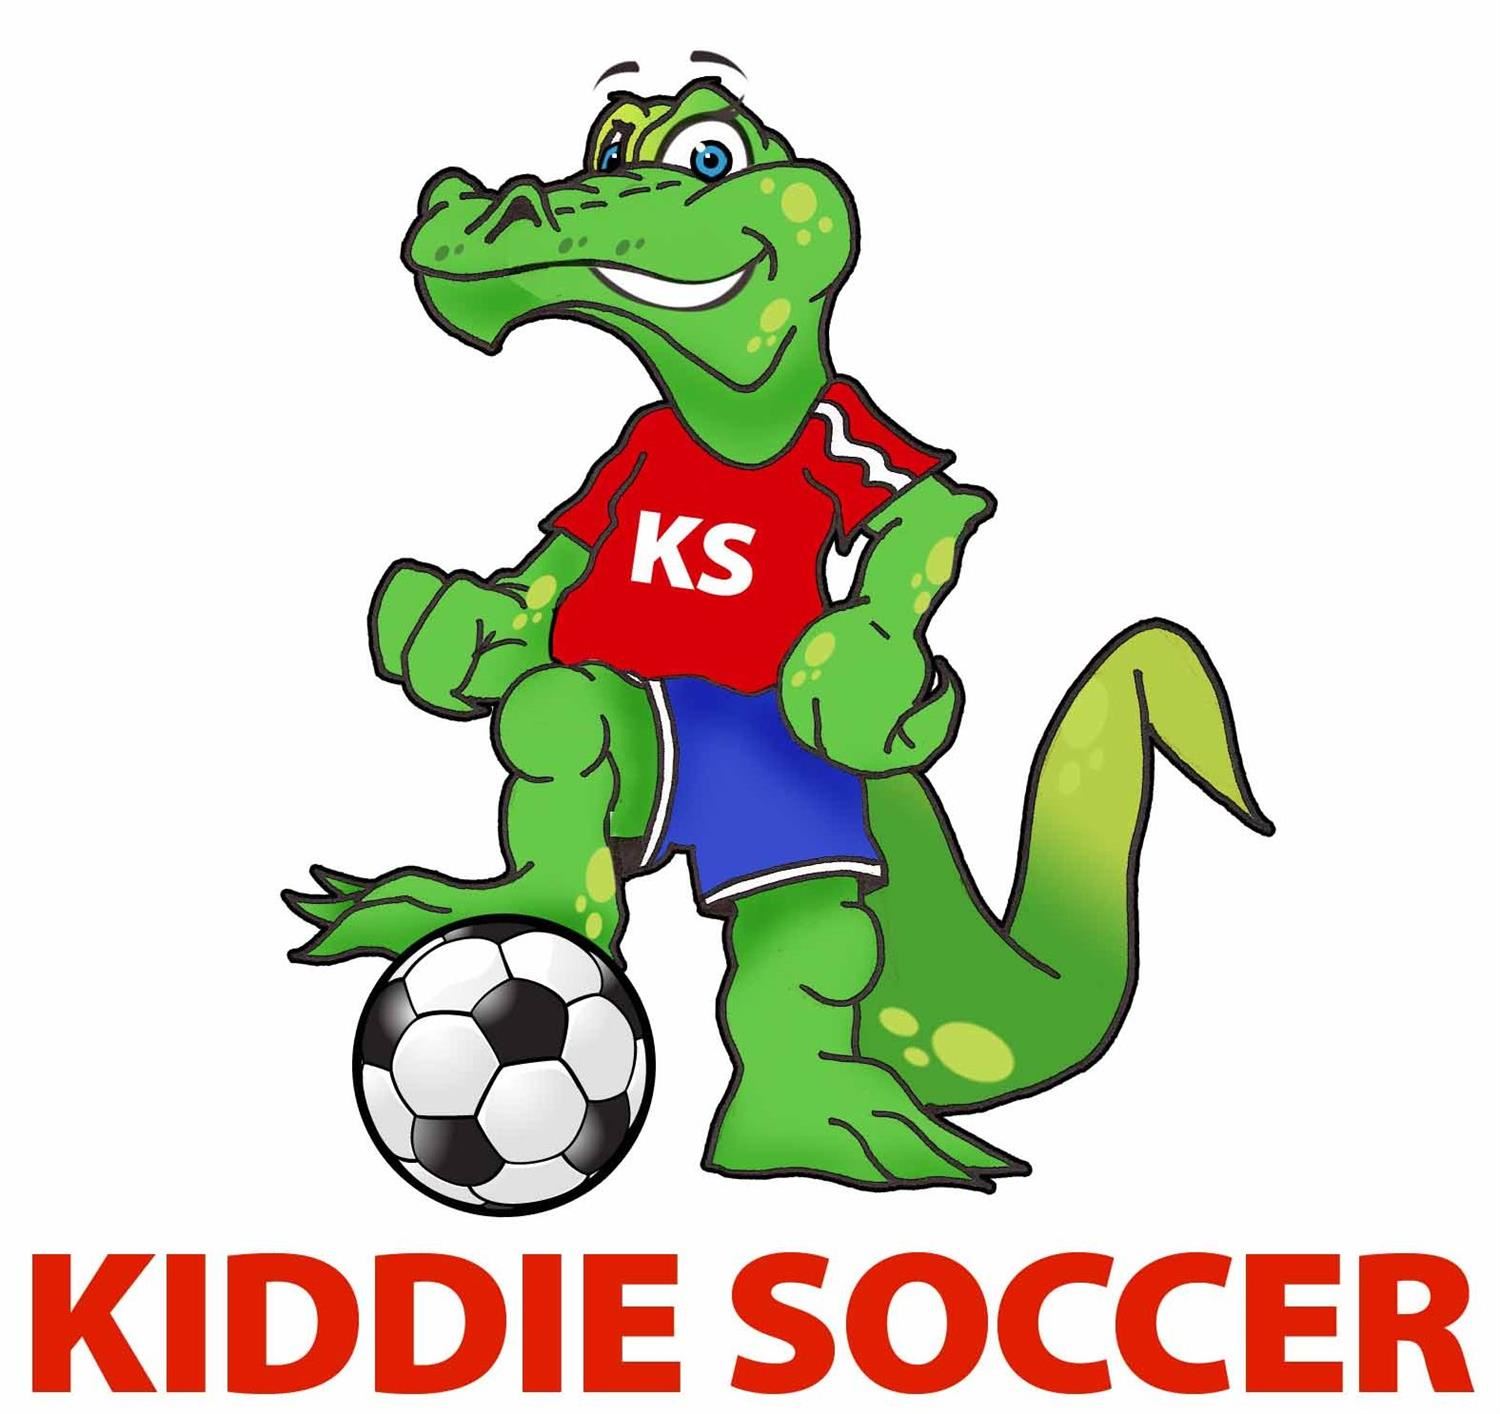 Kiddie Soccer logo 